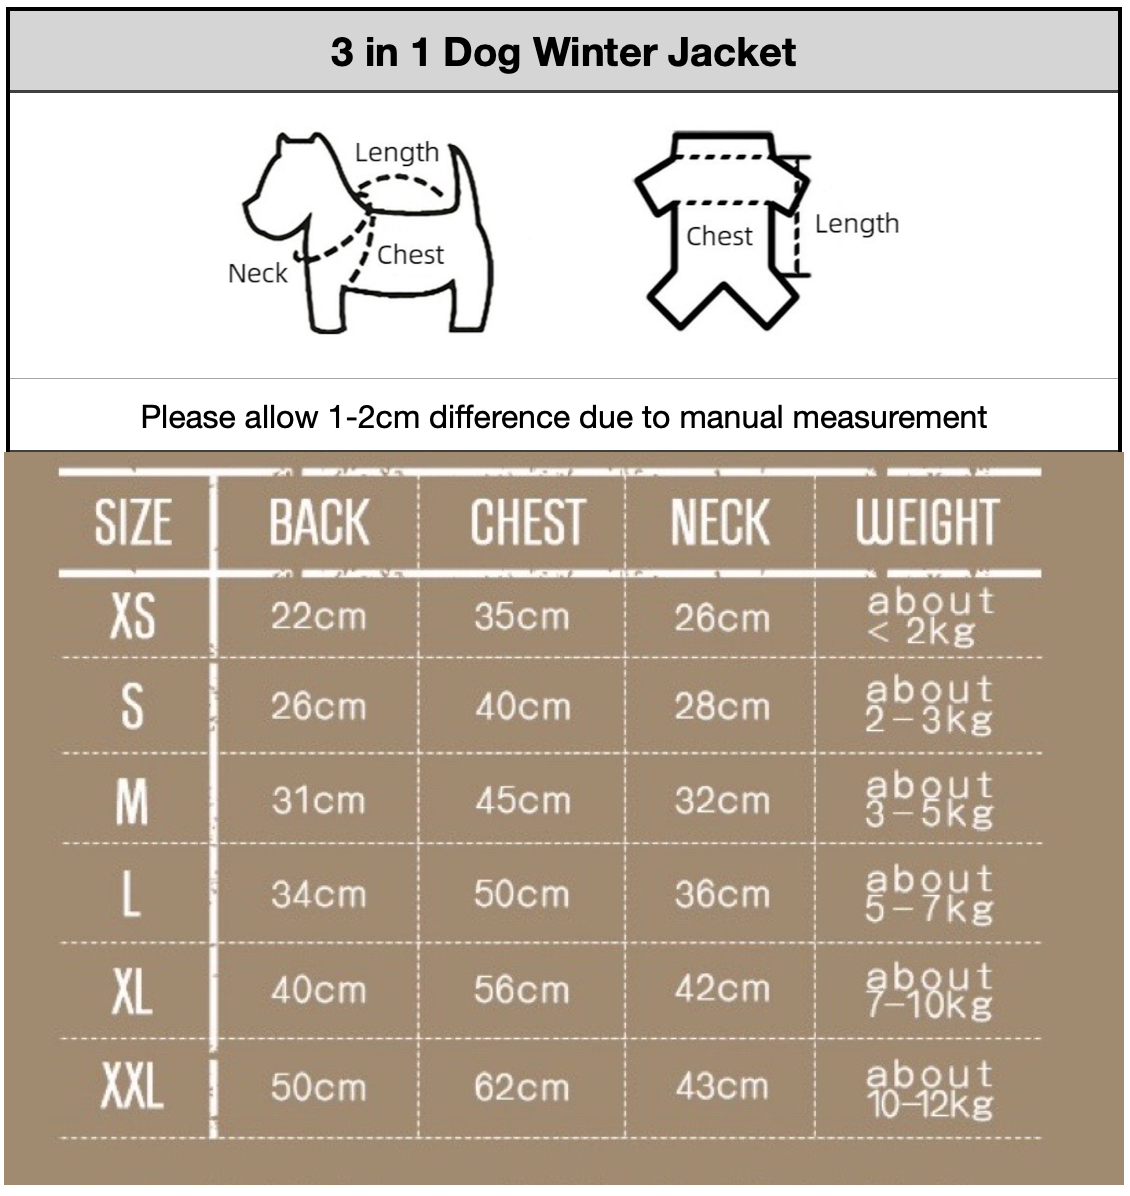 3 in 1 Dog Winter Jacket